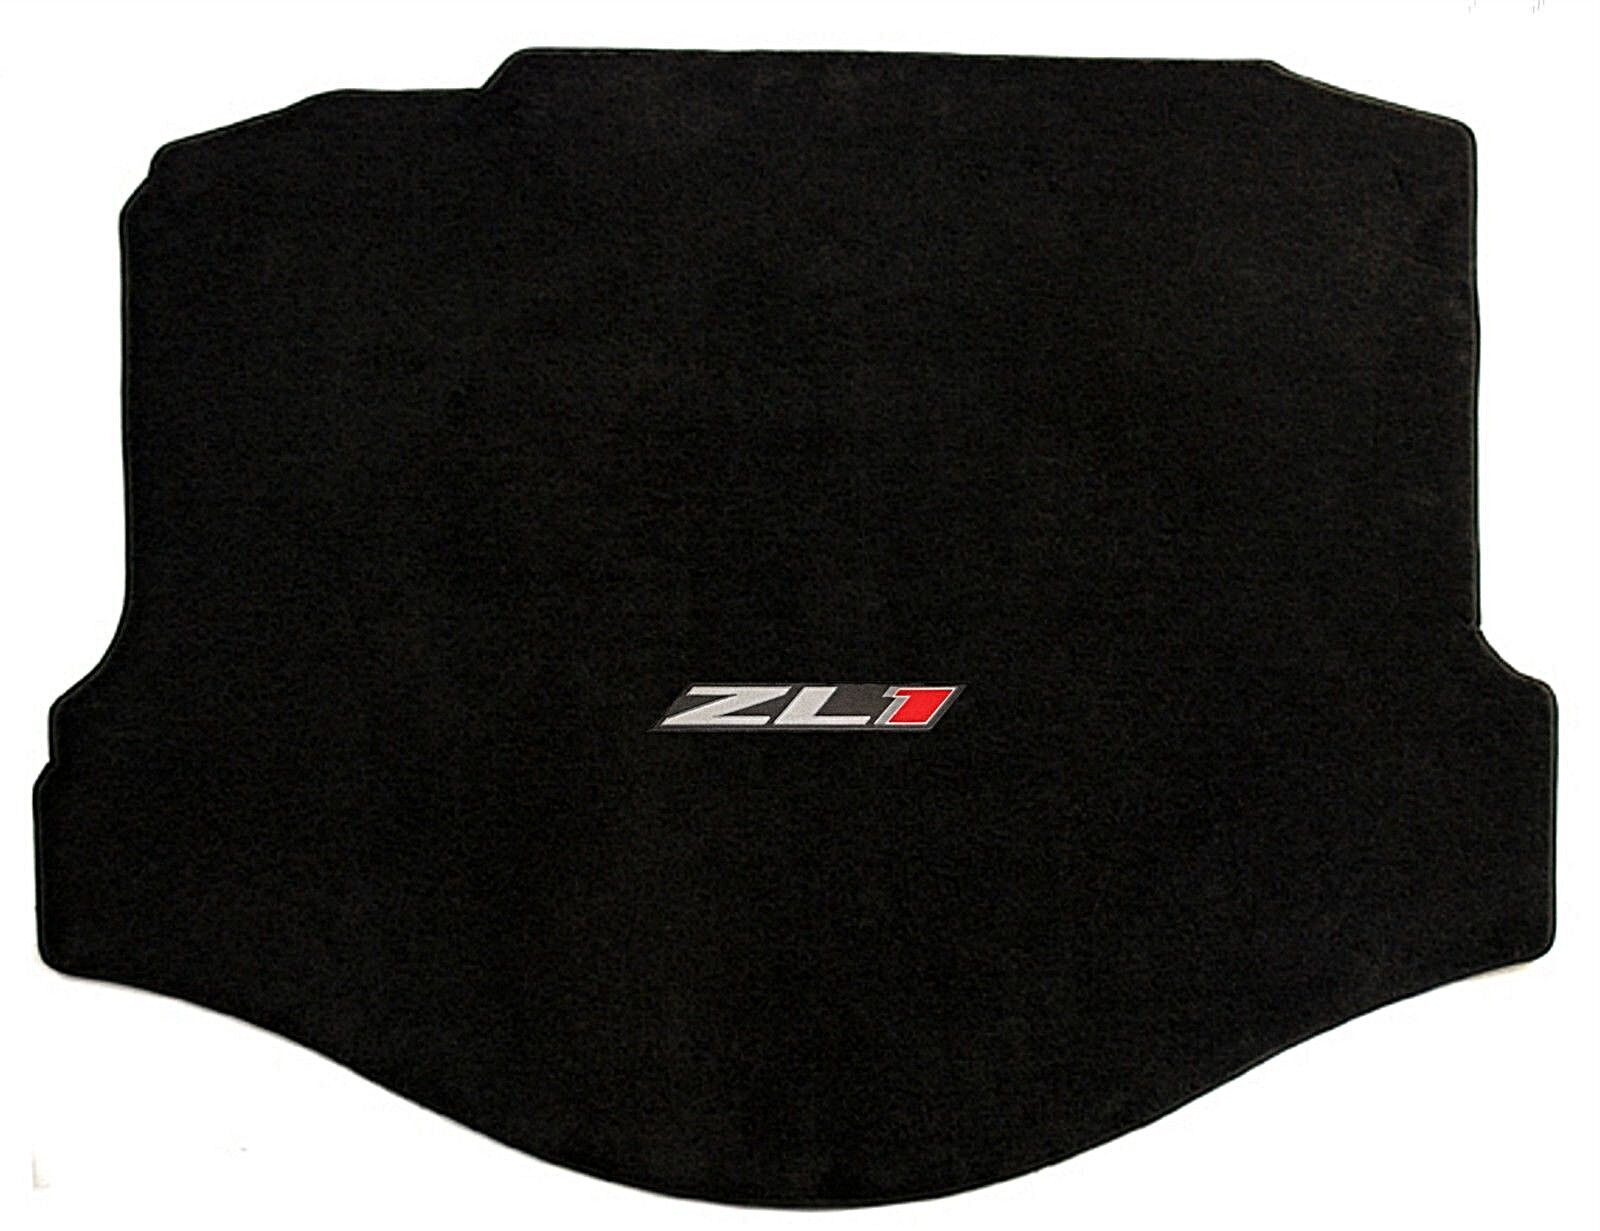 LLOYD MATS Classic Loop EBONY TRUNK MAT with logo 2012 to 2015 Camaro ZL1 COUPE